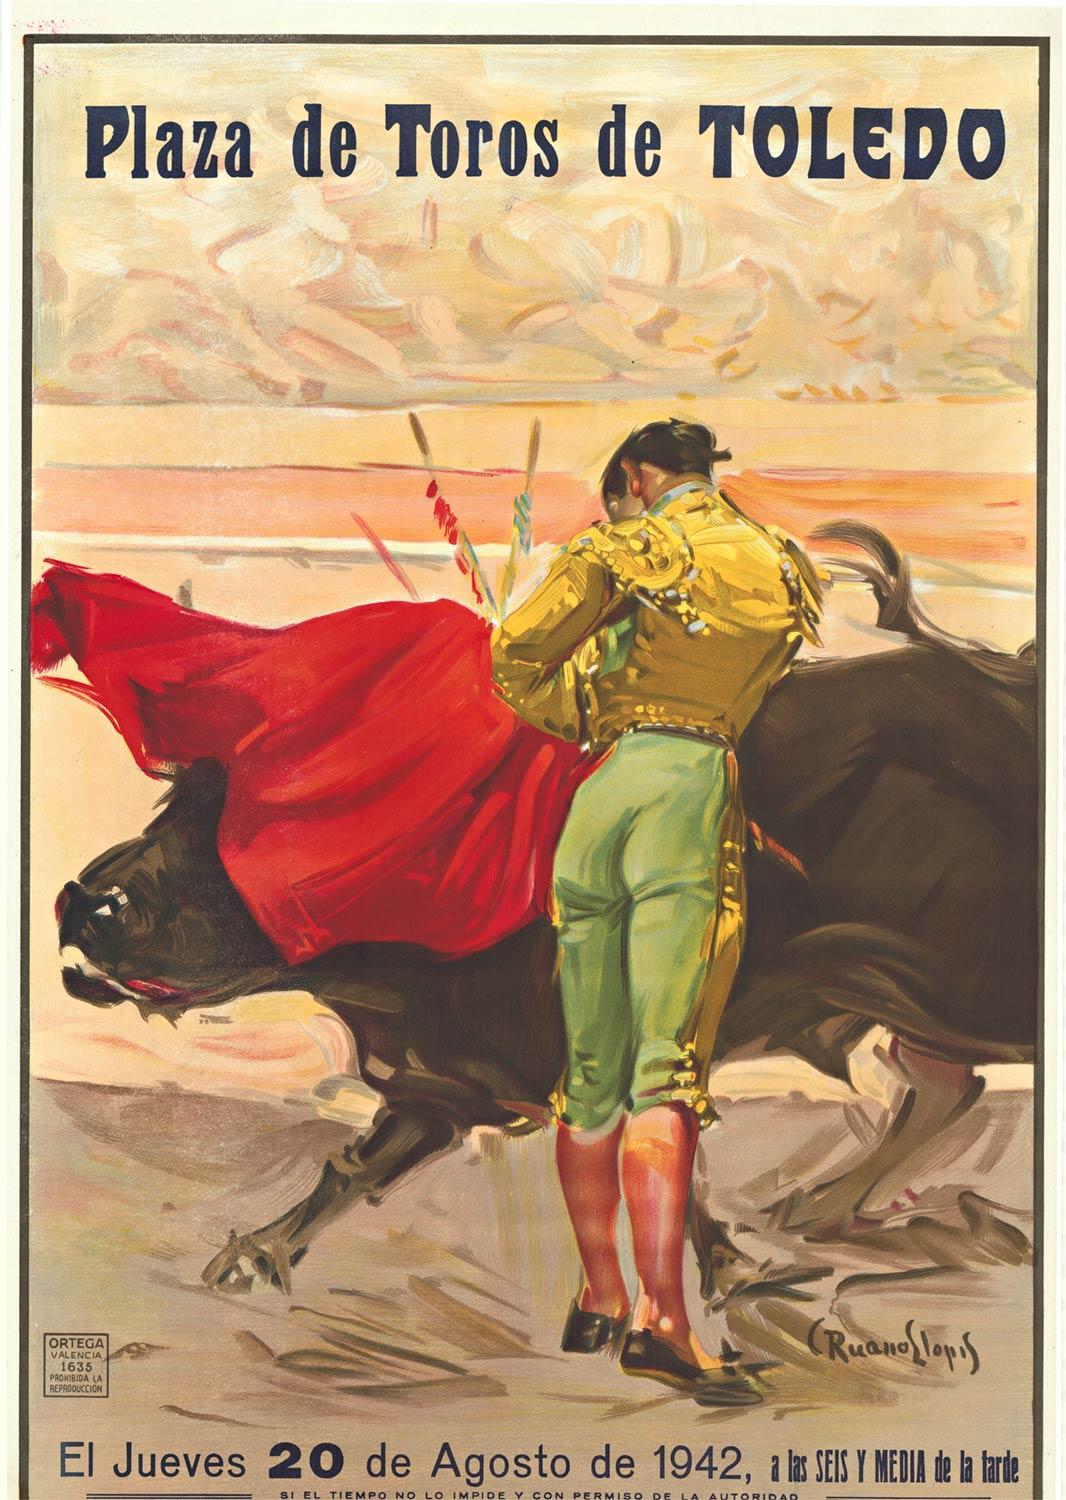 Original 1942 Plaza de Toledo vintage bullfighting poster - Print by Carlos Ruano Llopis